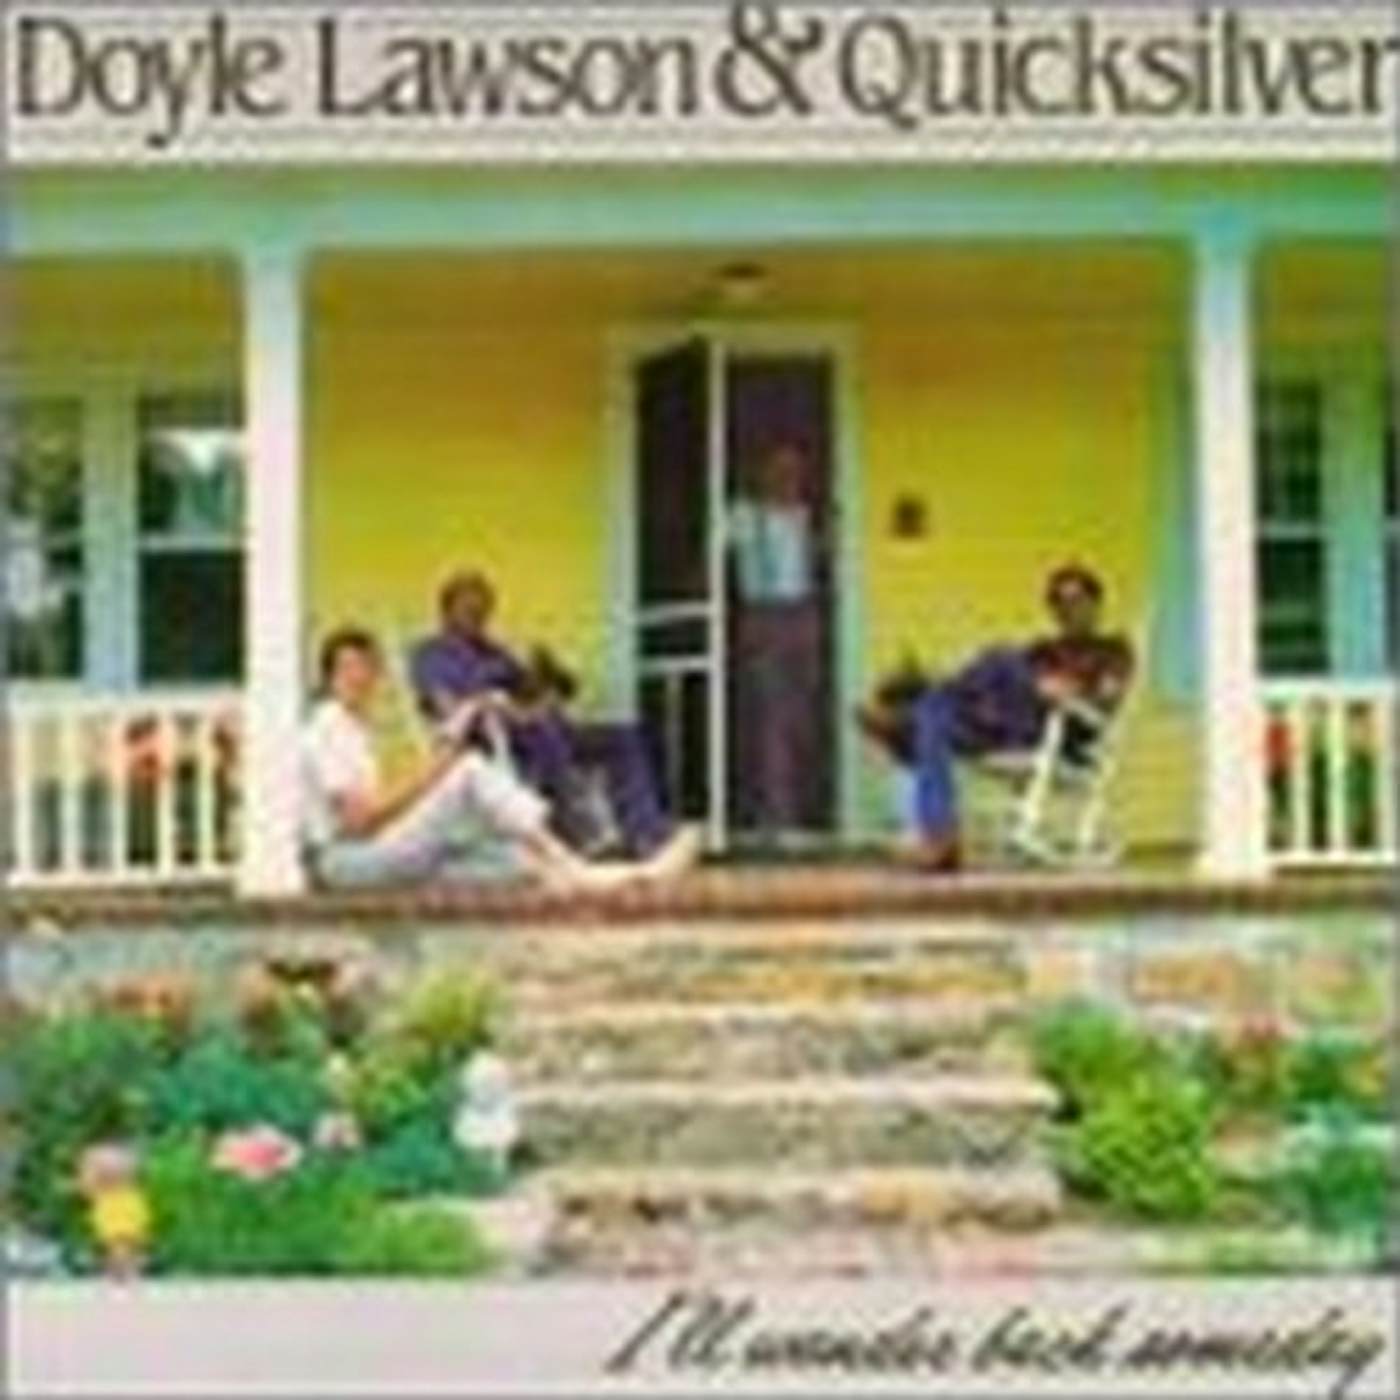 Doyle Lawson & Quicksilver I'LL WANDER BACK SOMEDAY CD